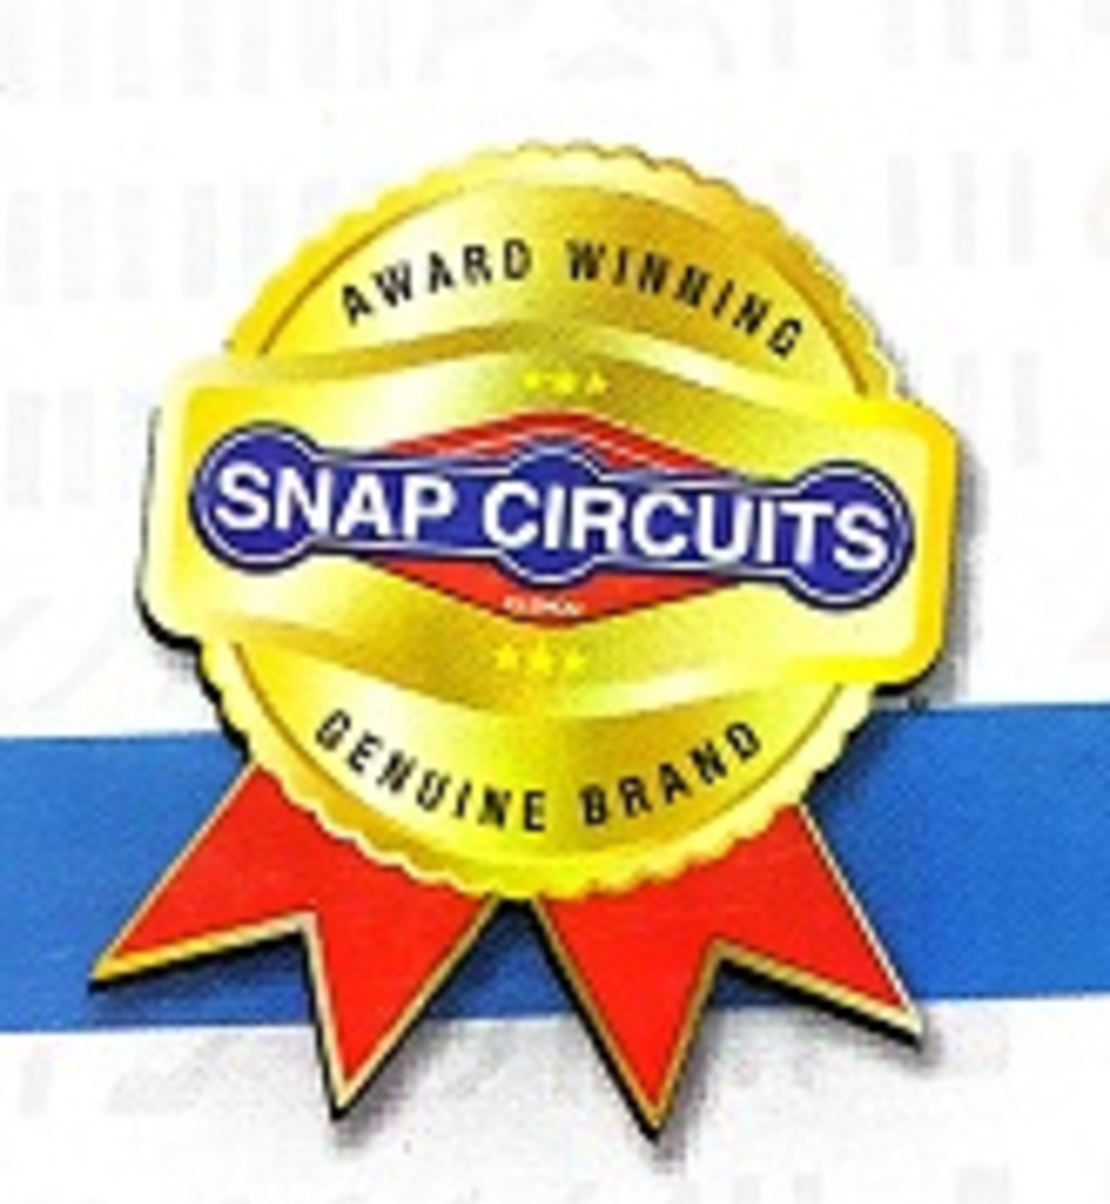 Snap Circuits SCA200 Arcade